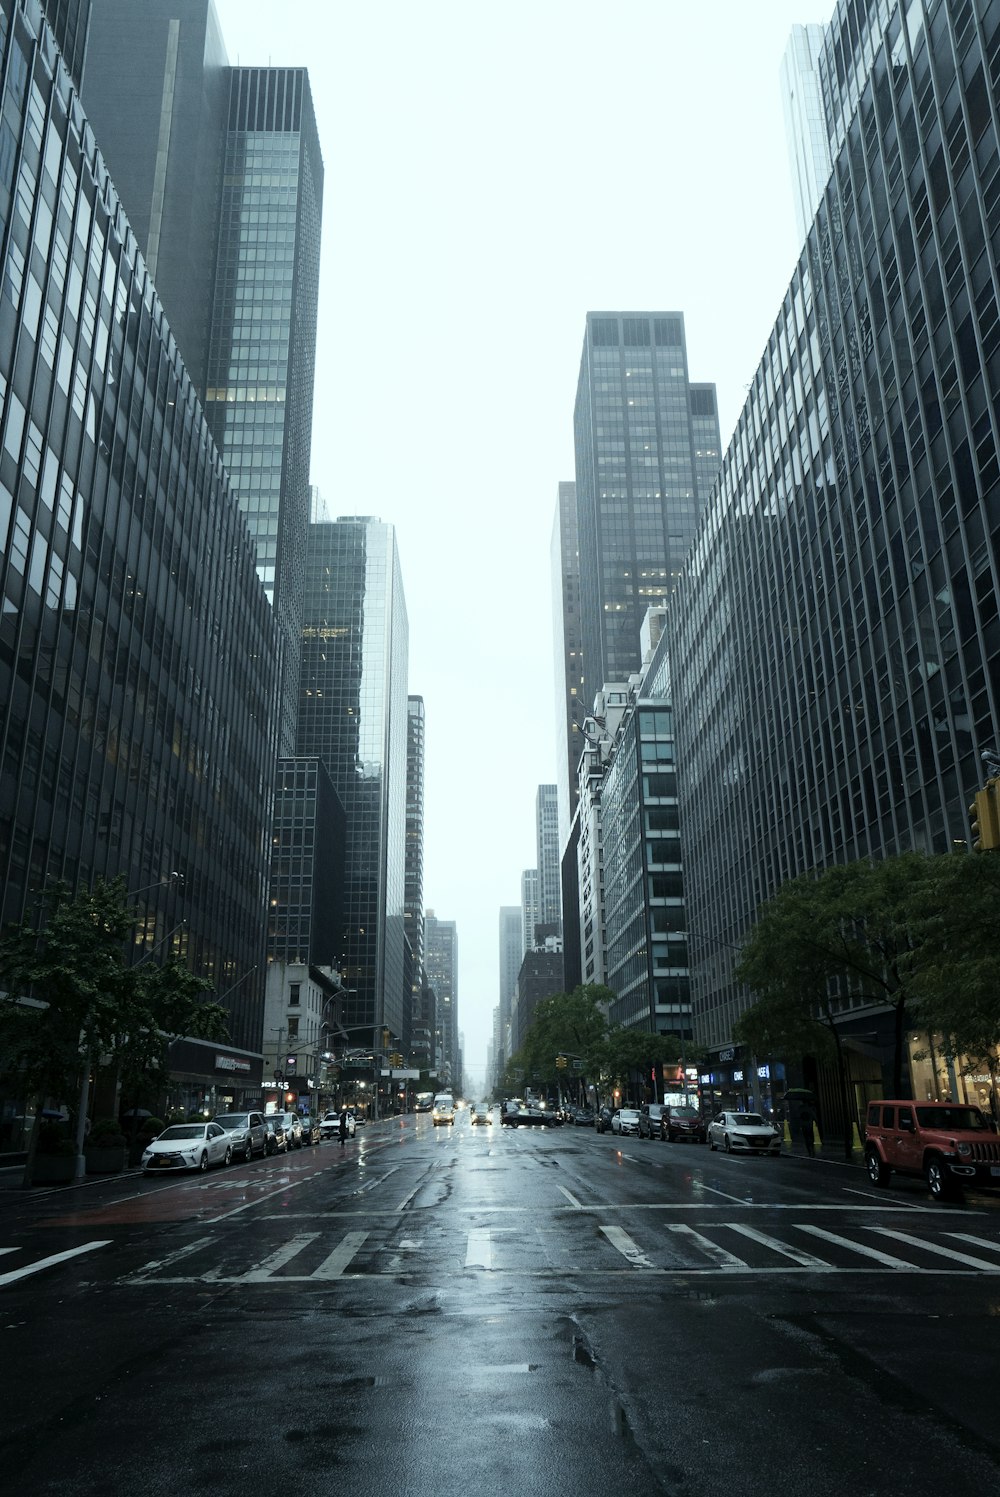 New York in the Rain  City rain, Rainy city, Rainy day pictures